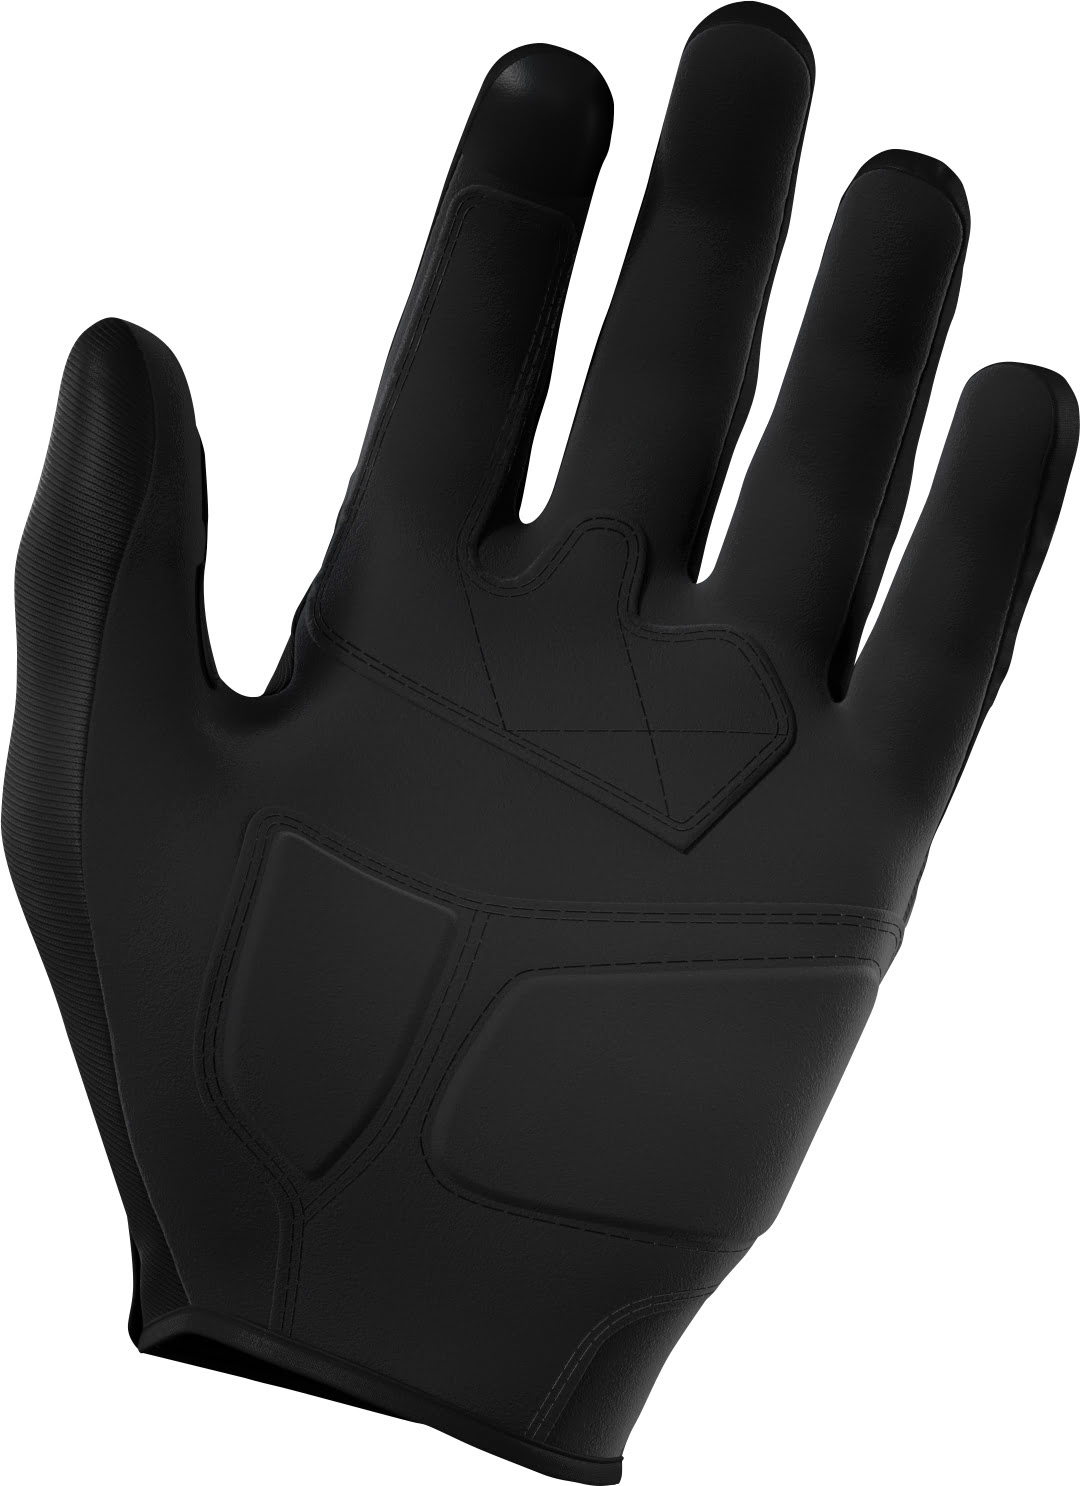 Gloves DRIFT SPIDER Black SHOT 